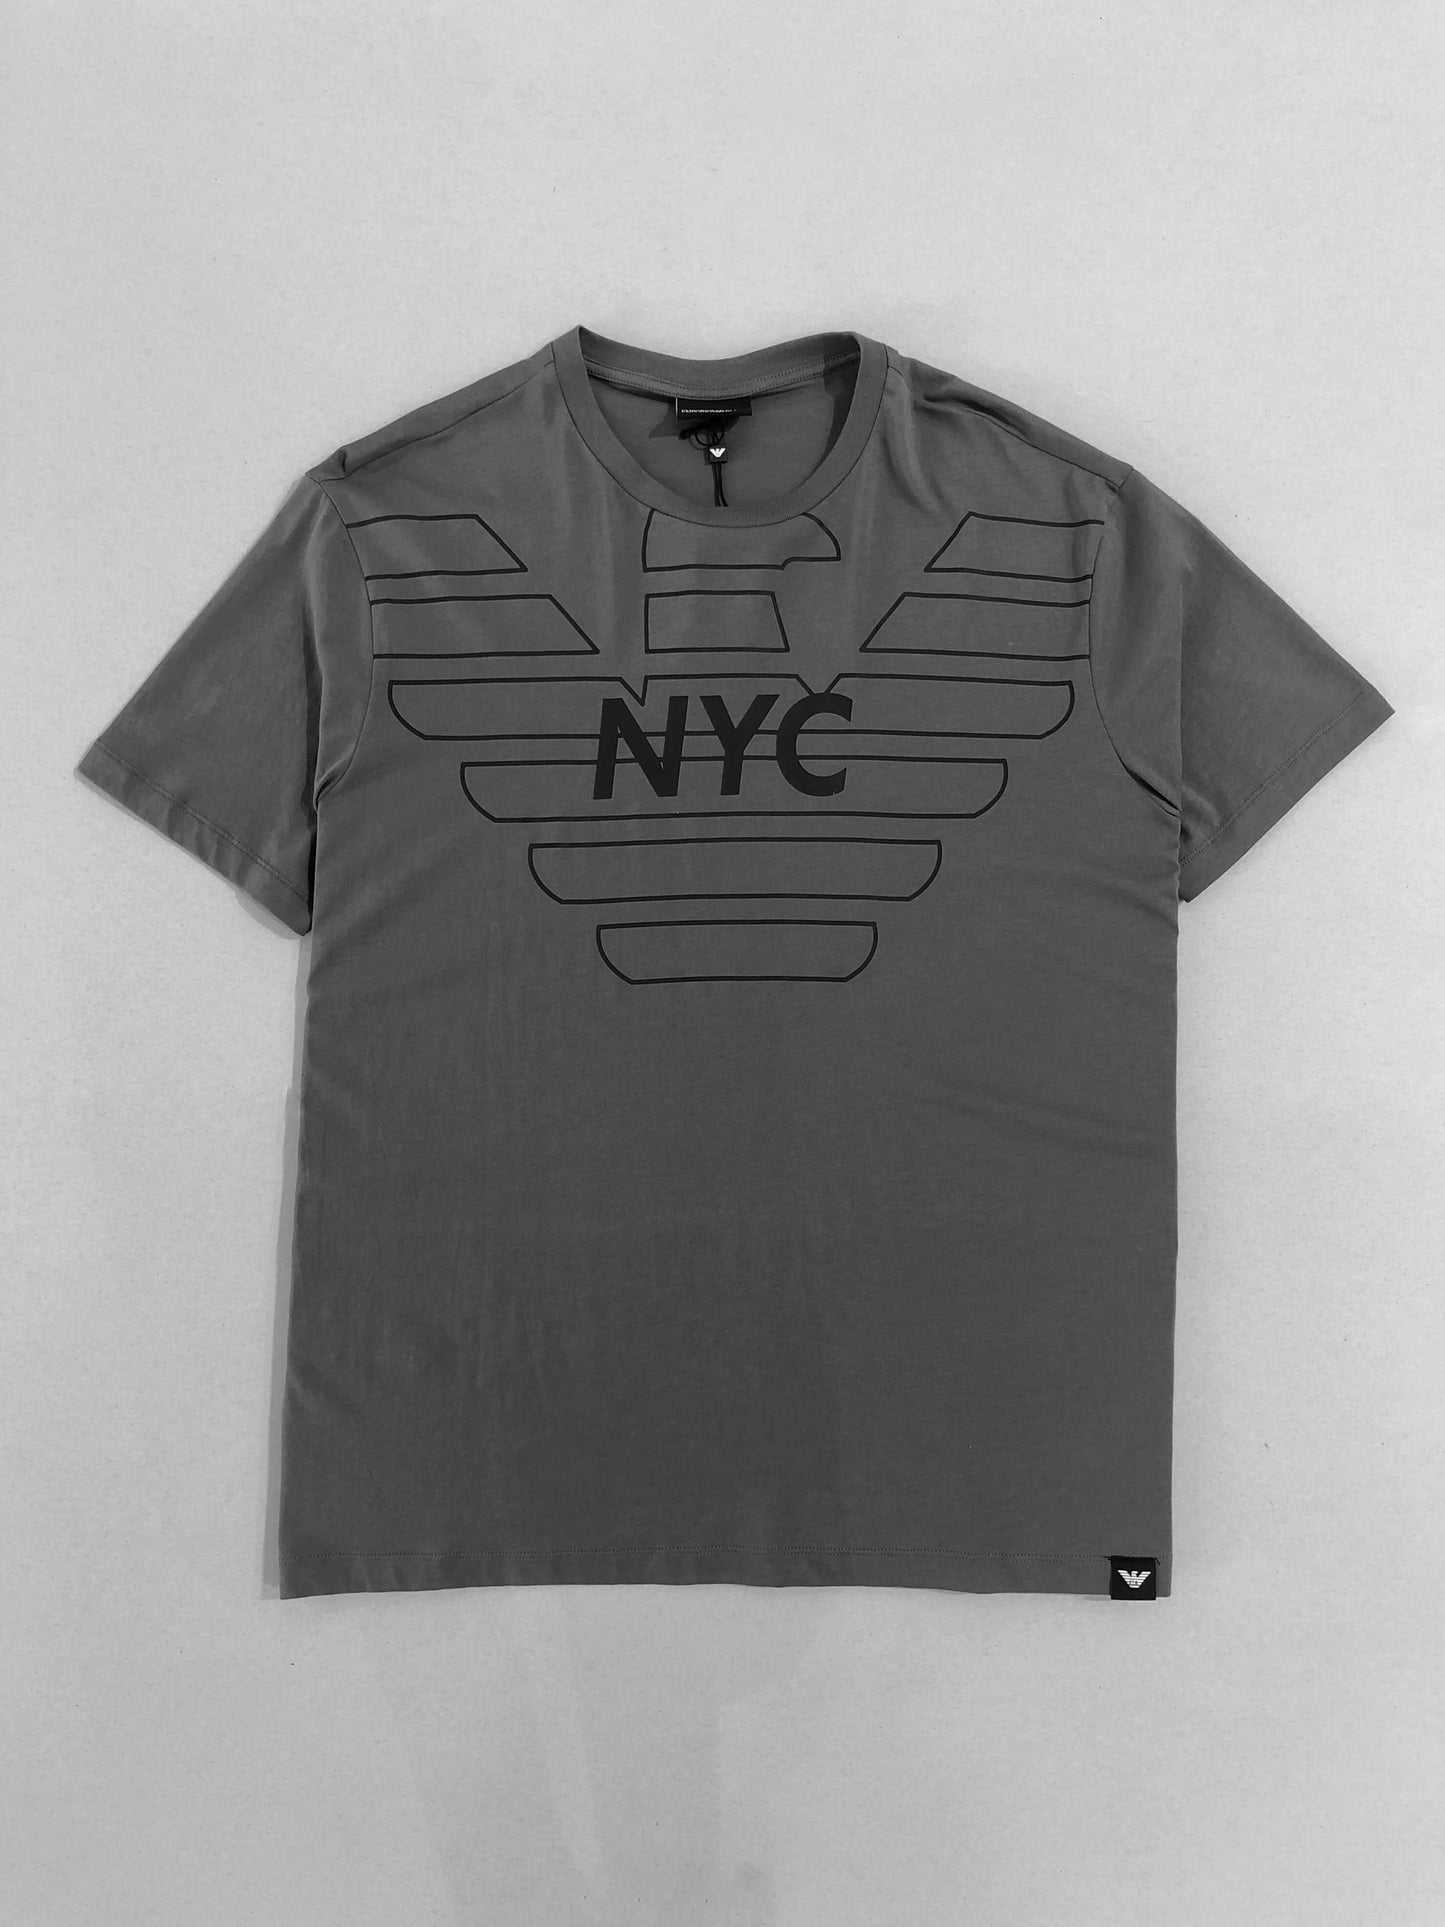 Emporio Armani NYC T-shirt